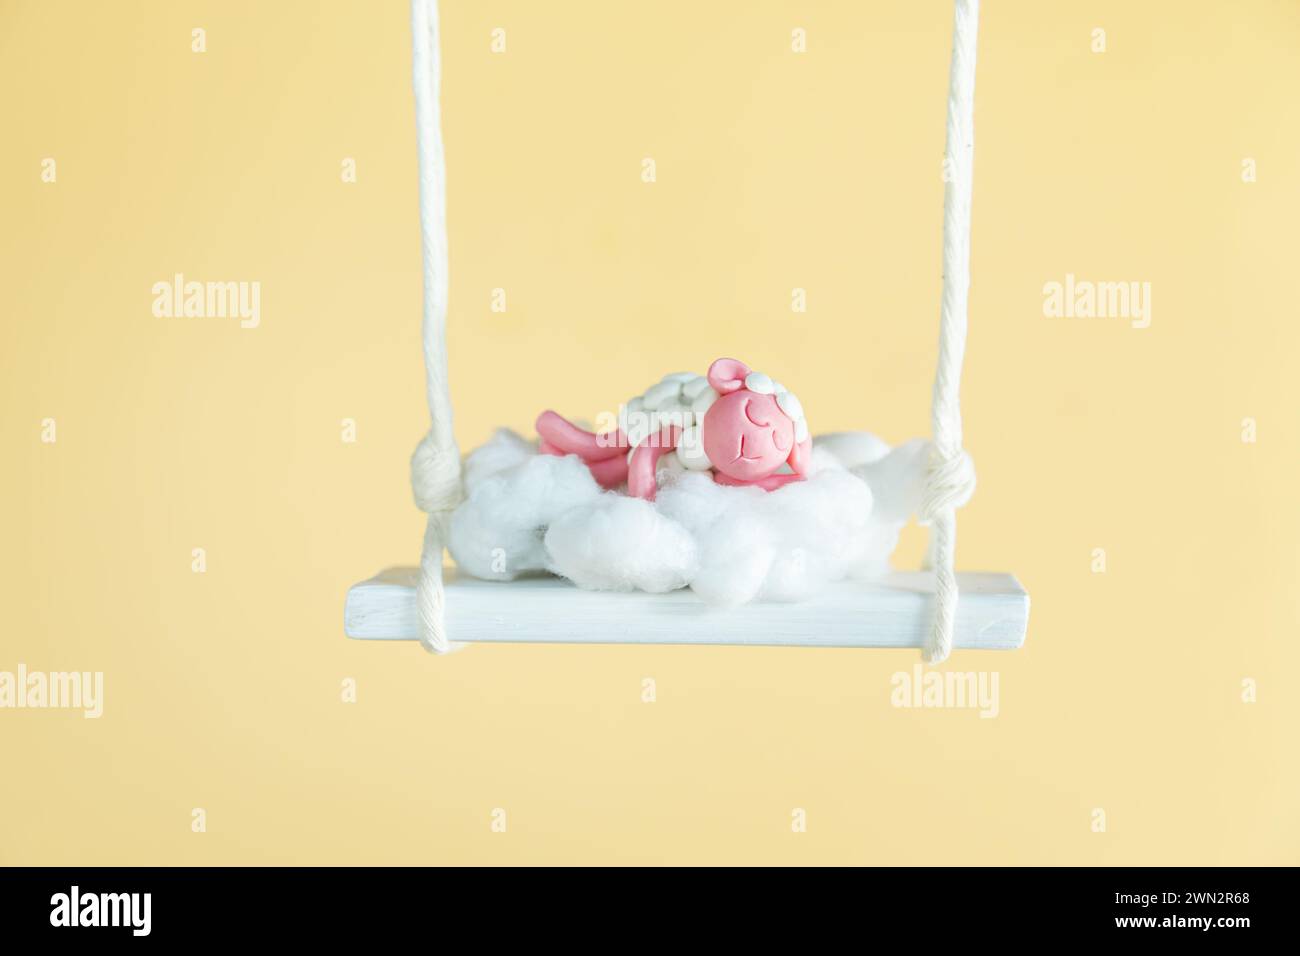 Cute plasticine sheep sleeps on a swing. Good night sweet dreams. Yellow background, copy space. Stock Photo